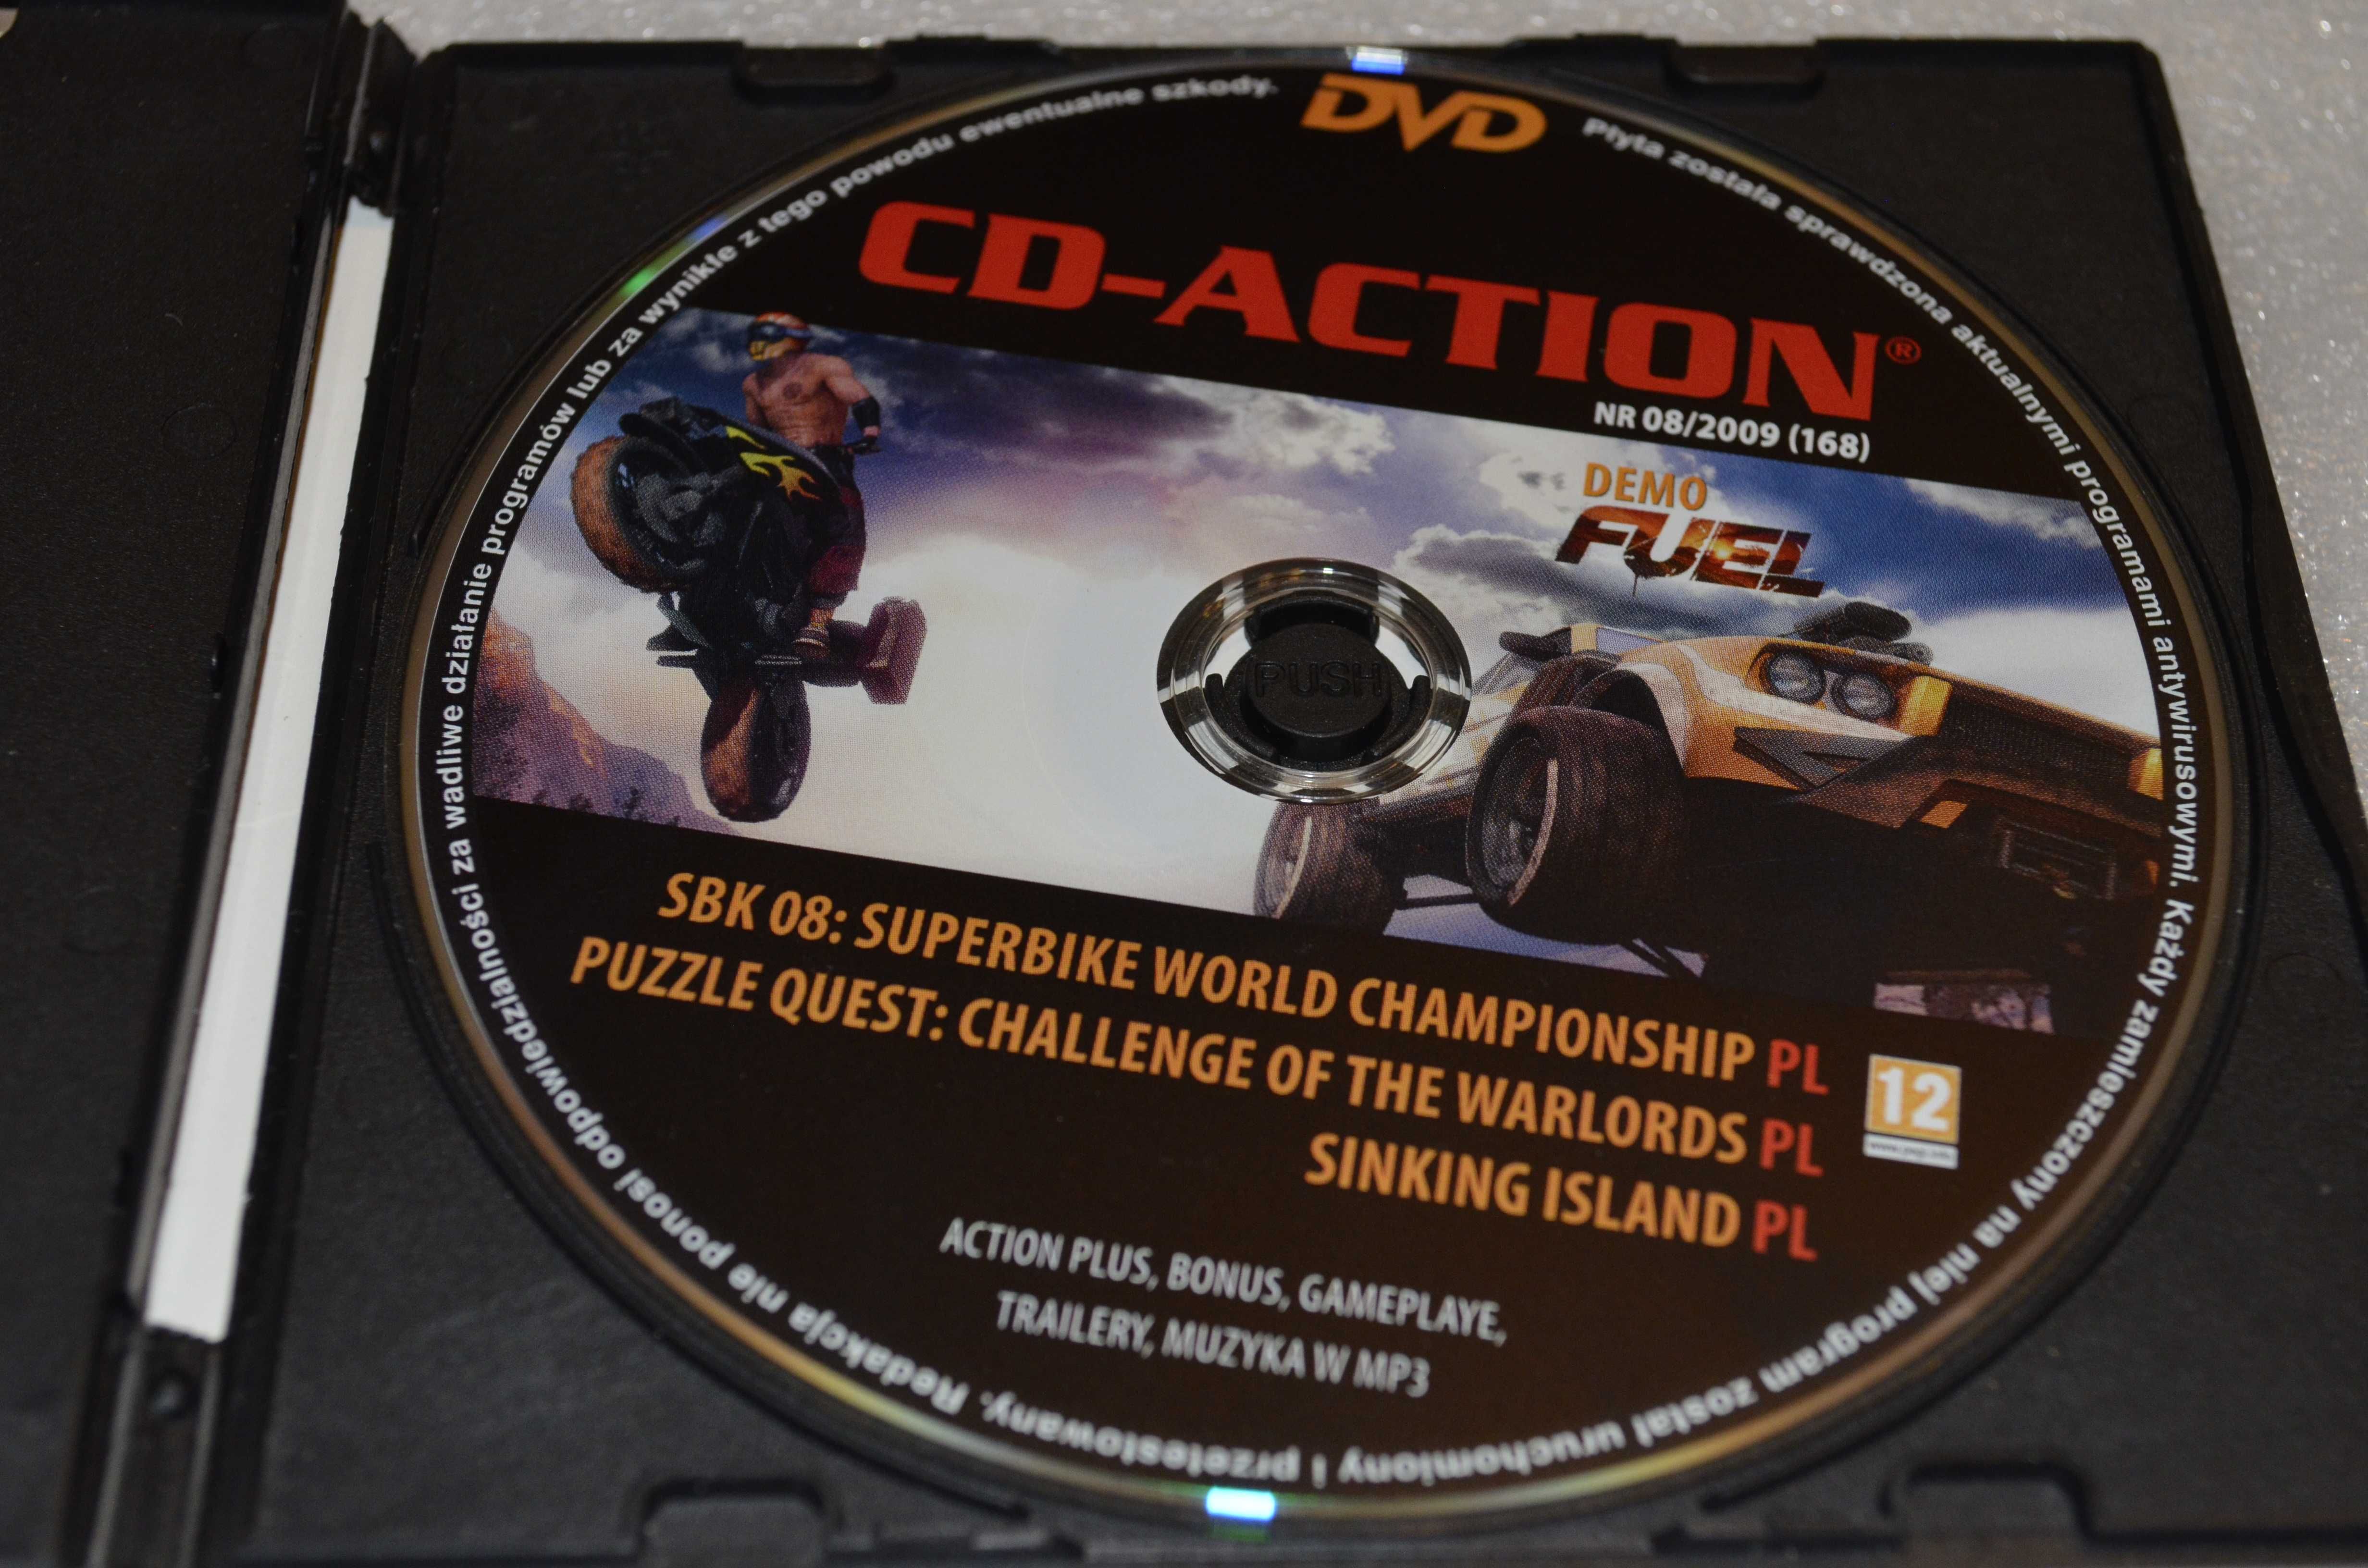 SBK 08 Superbike World Championship, Puzzle Quest, Sinking Island